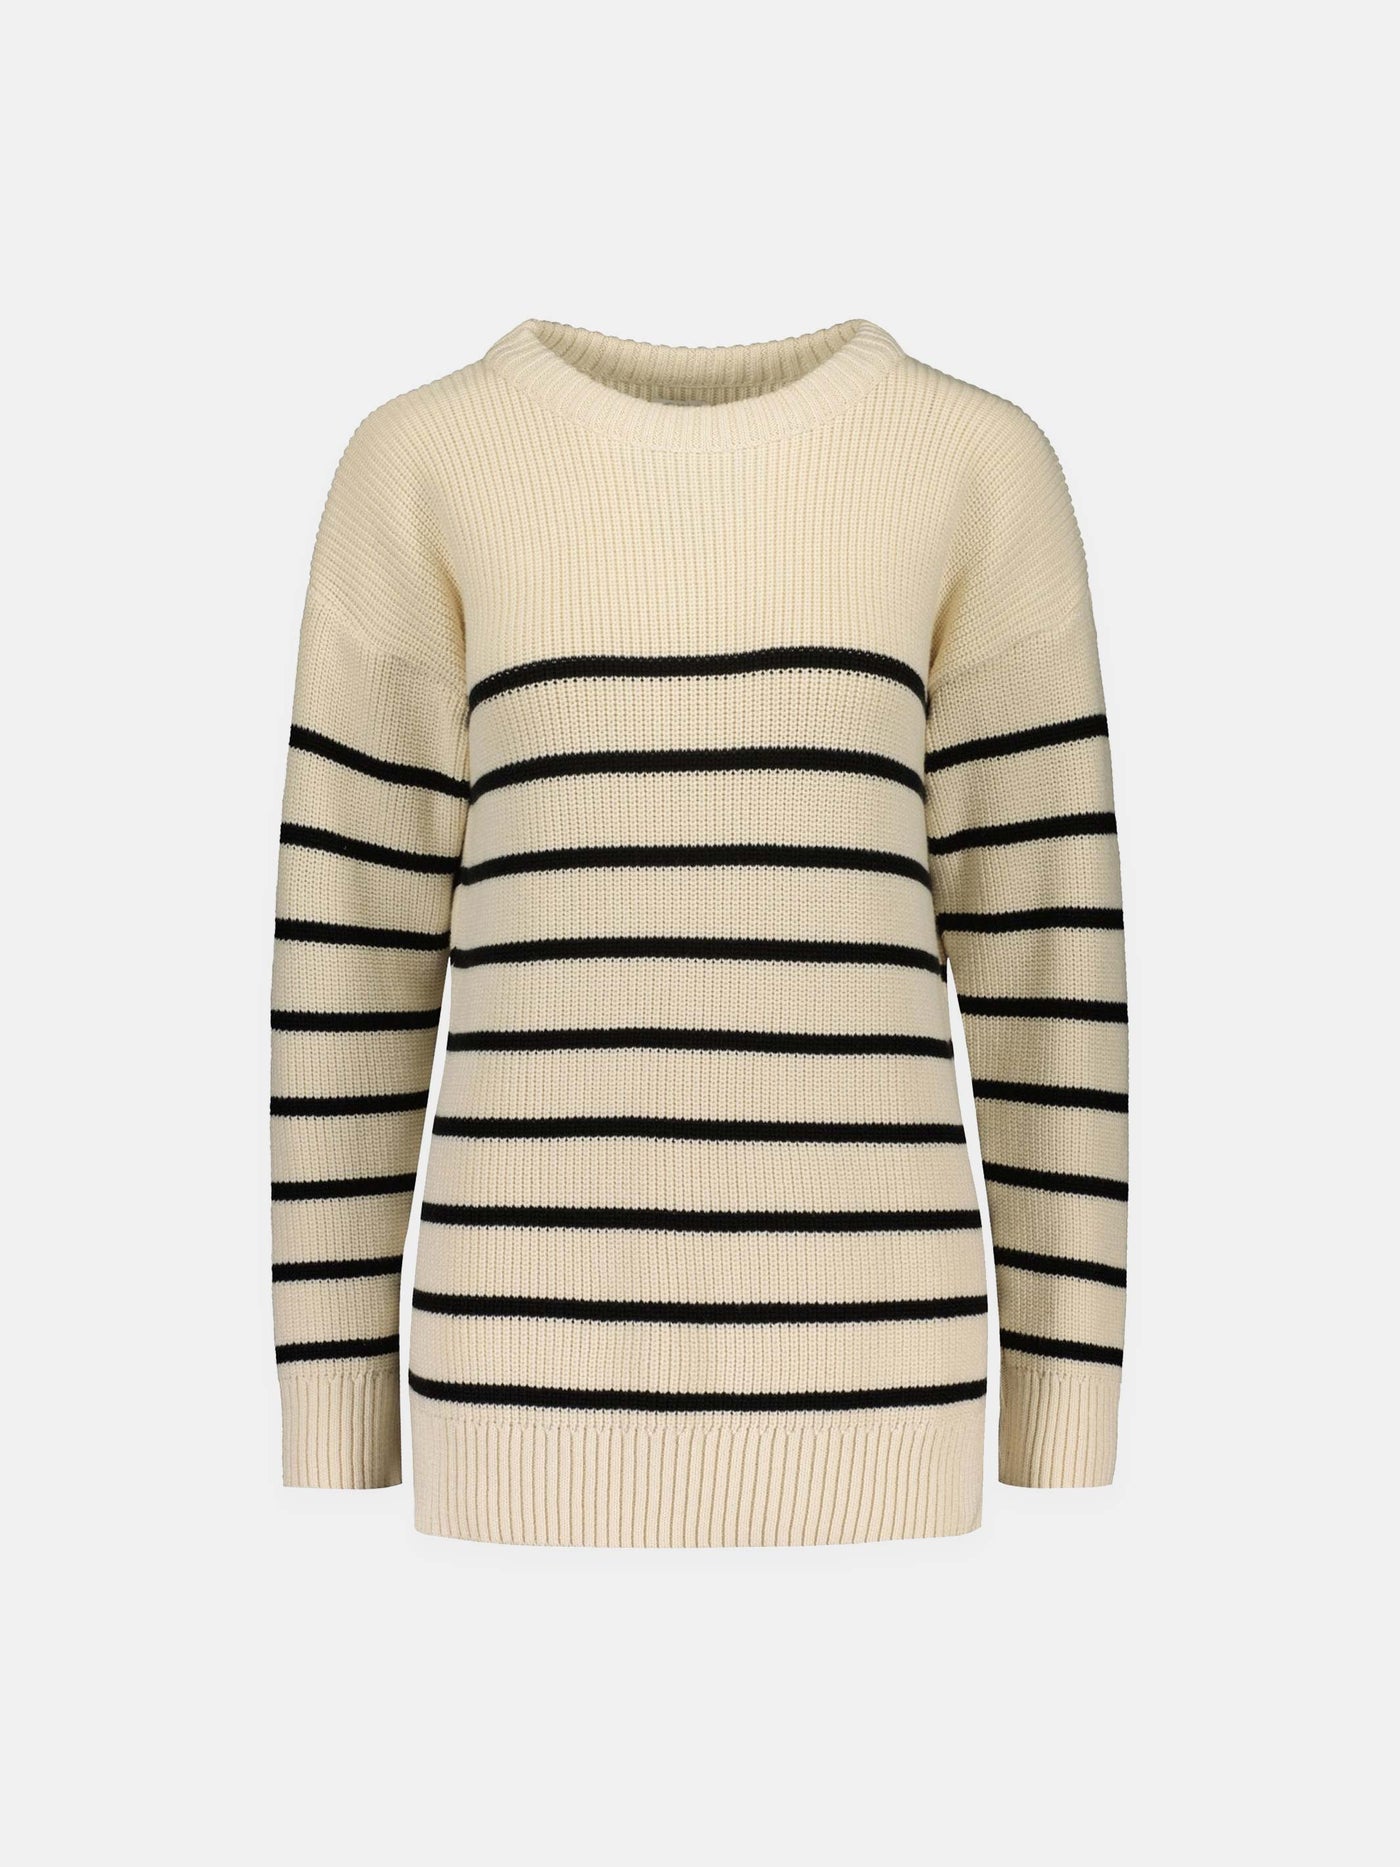 Striped knit, off-white